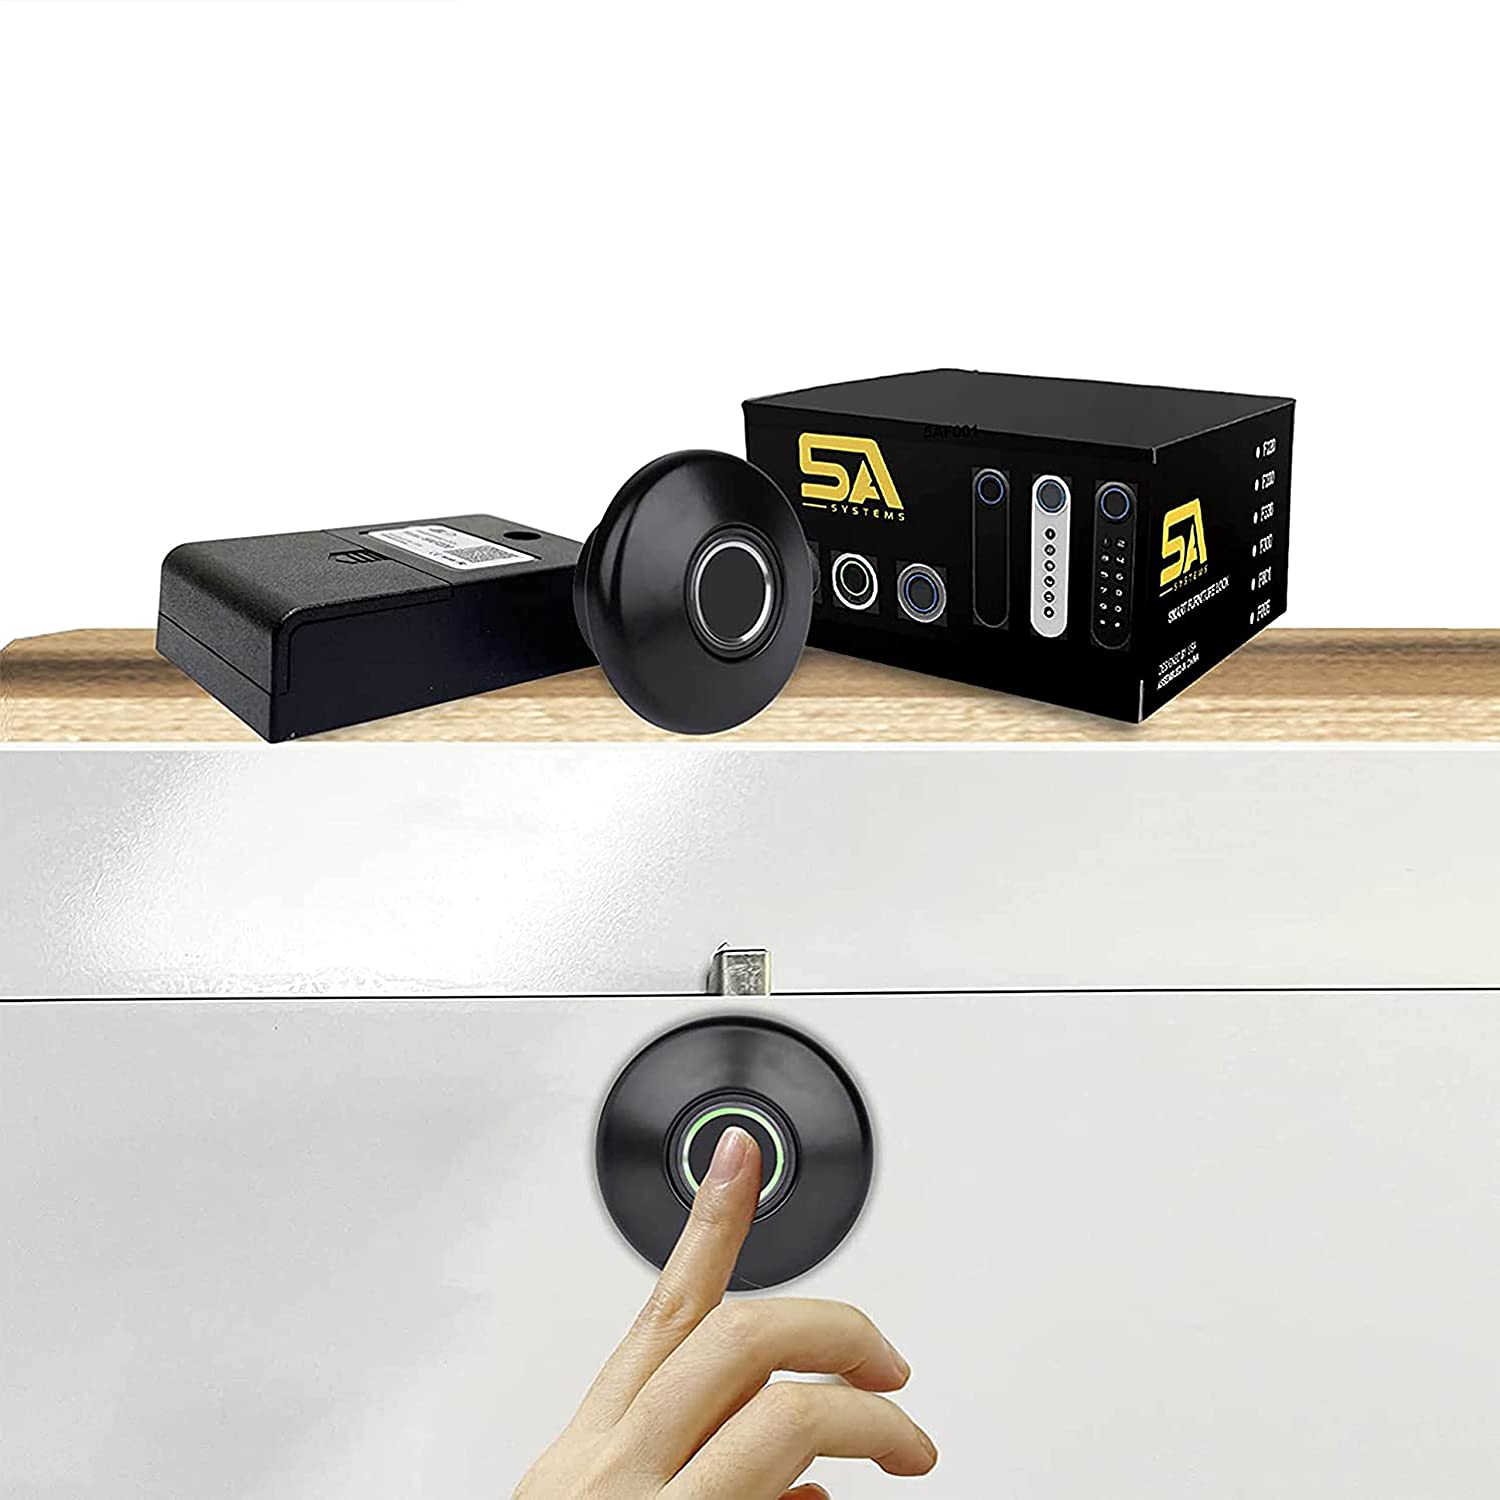 Best Price for Handle Lock Latch Fits Isuzu D-Max Truck 2015 - Keyless Cabinet Lock Biometric Lock Privacy Lock for Office – GD